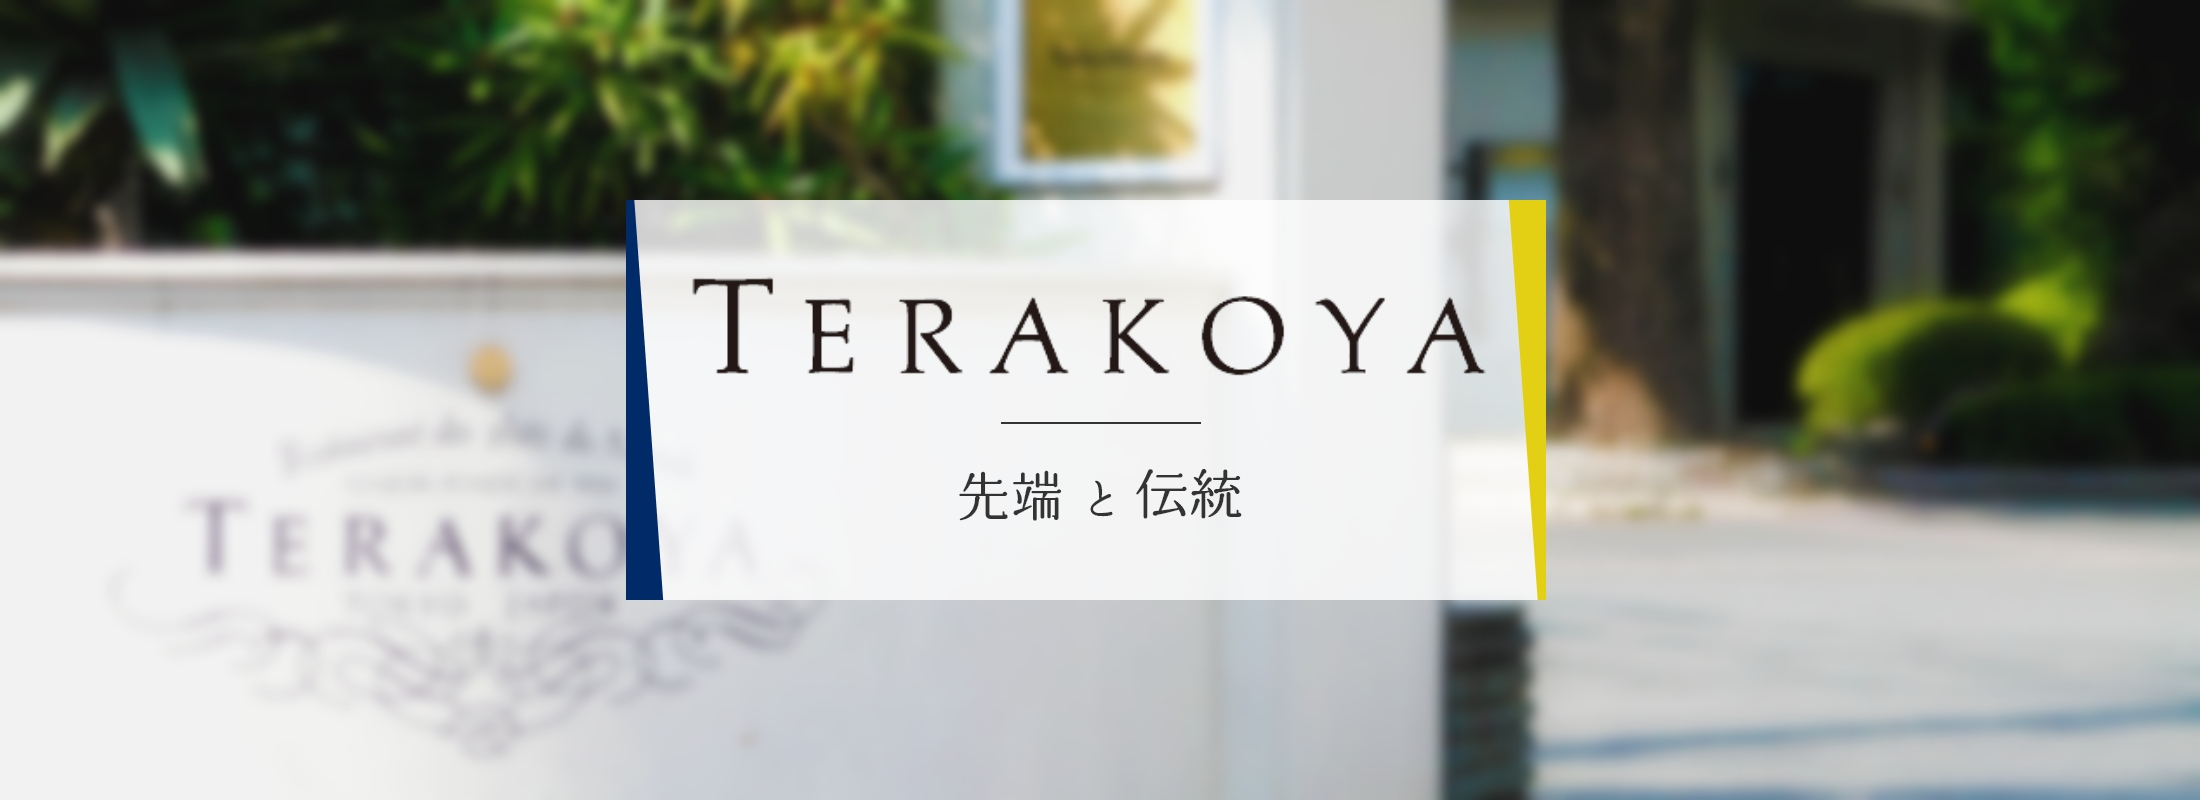 TERAKOYA - 伝統と先端 -